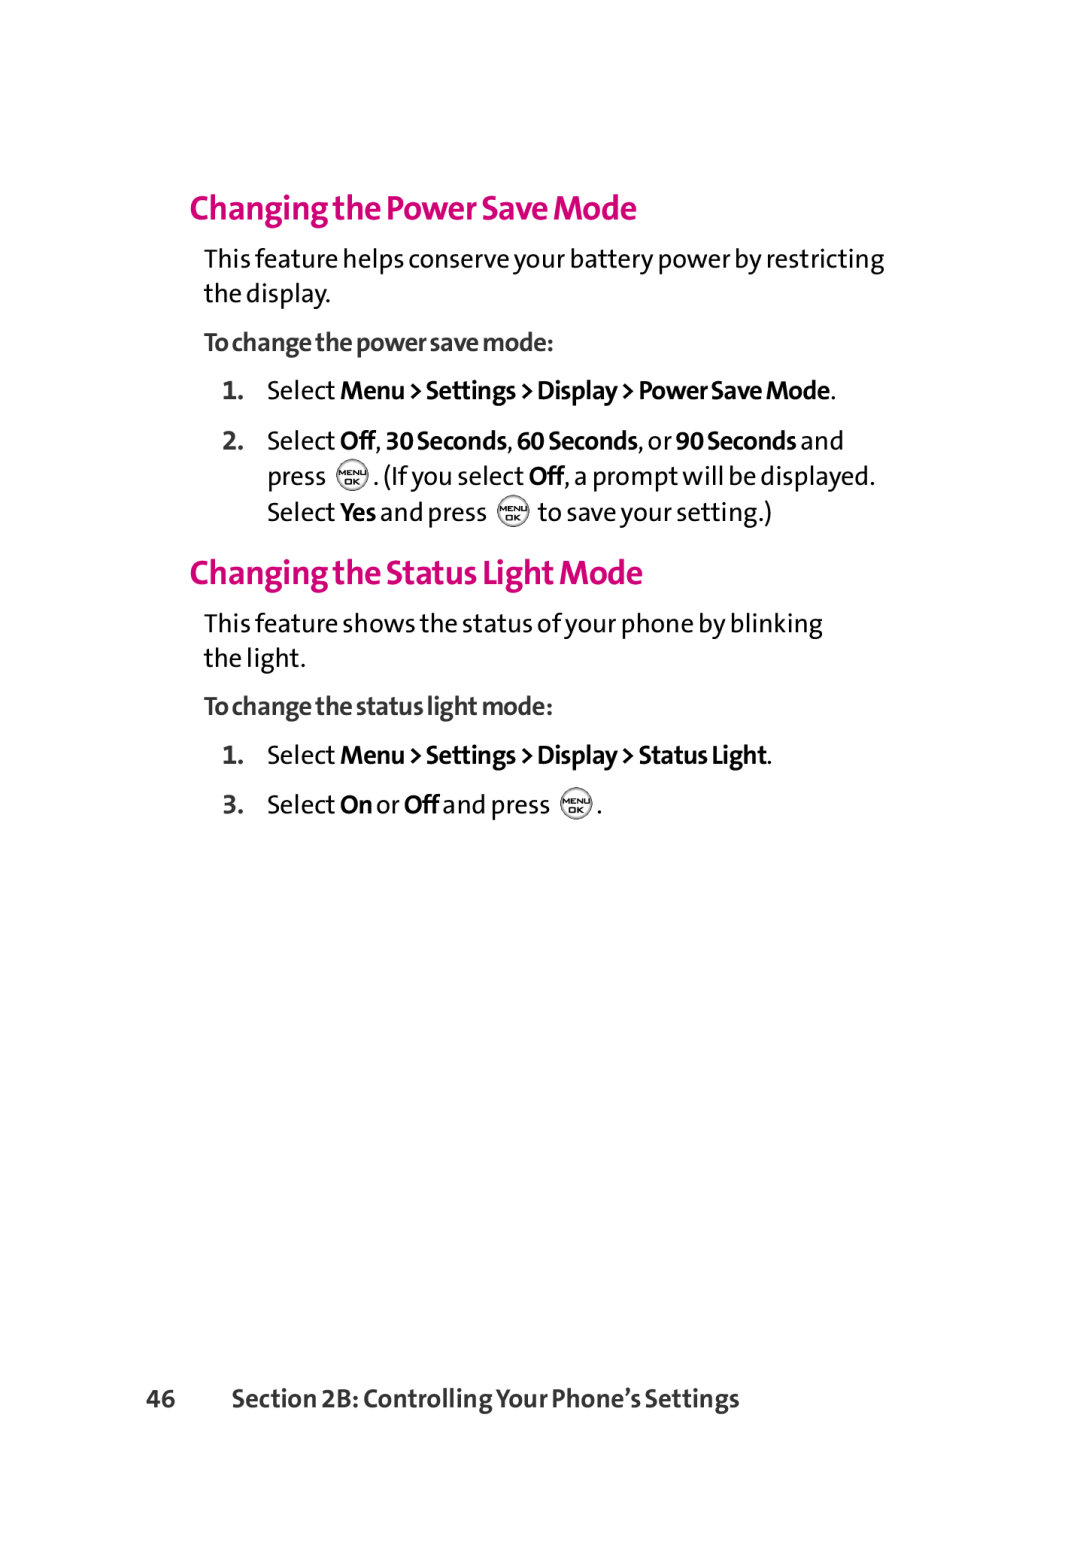 LG Electronics 350 manual Changing the Power Save Mode, Changing the Status LightMode, Tochangethepowersavemode 